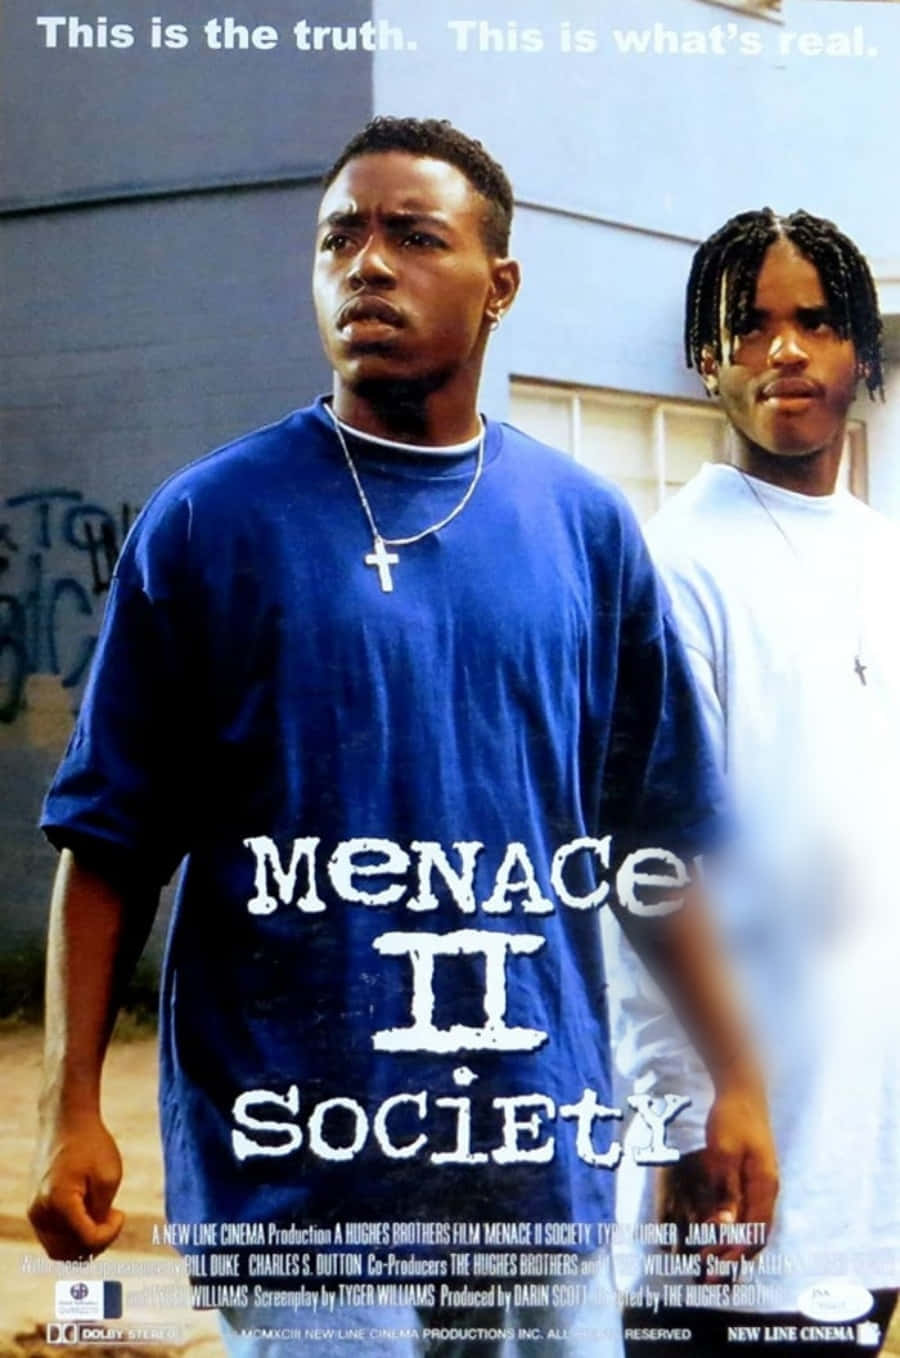 Menace II Society OG Shiznit  Odog Black love art Hip hop art